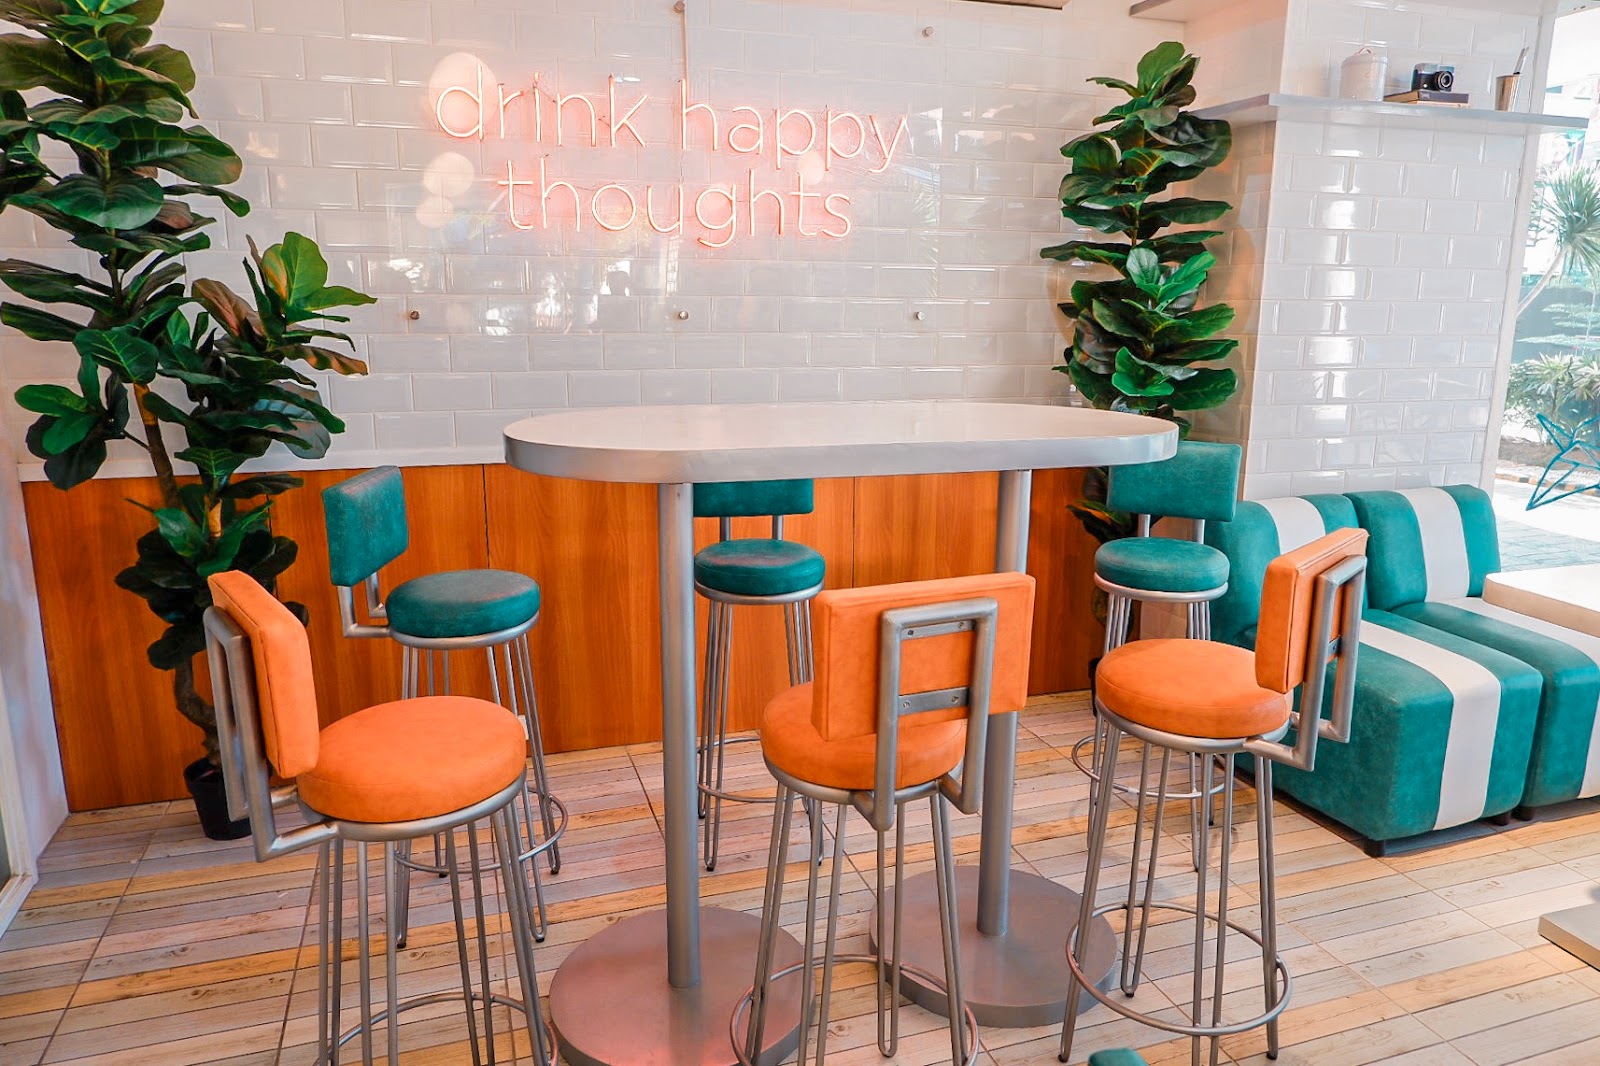 Sprocketeer Cafe: Modern Diner with Retro Vibes